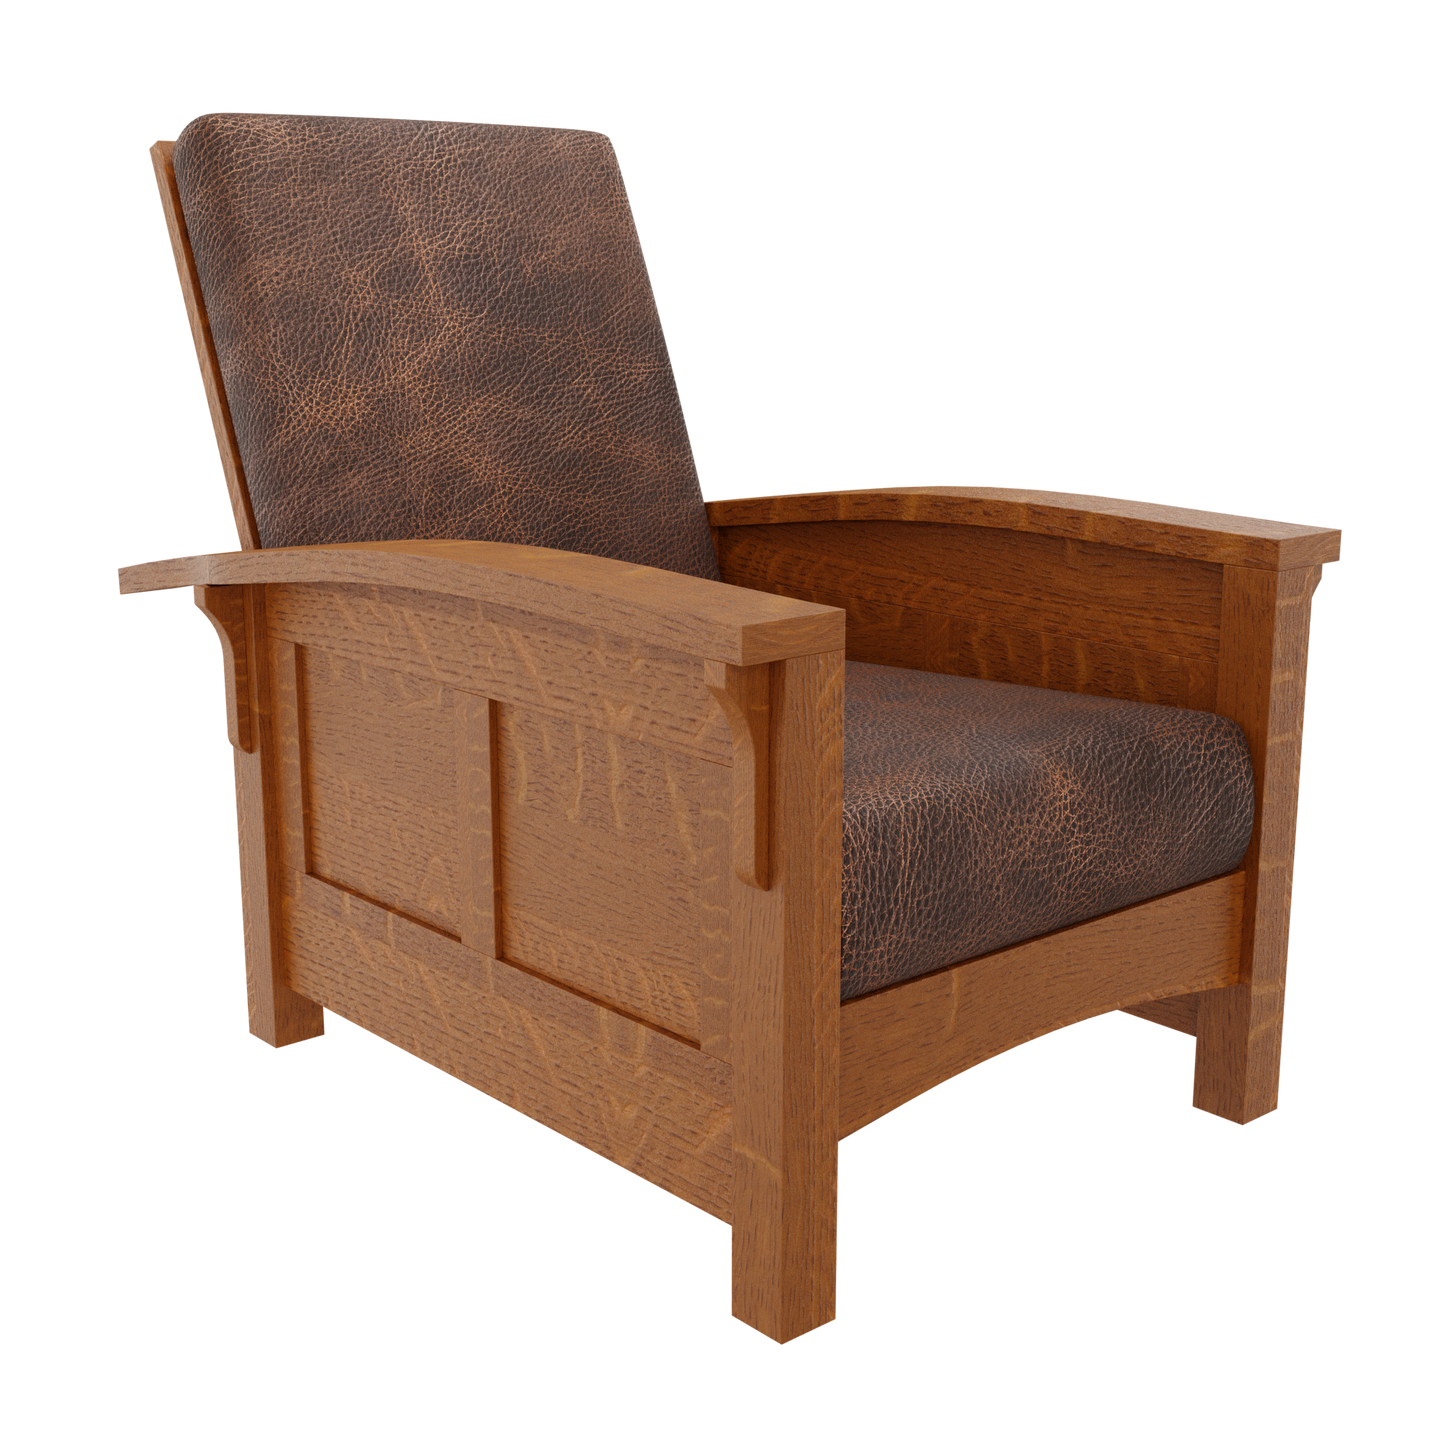 Bent Arm Panel Morris Chair